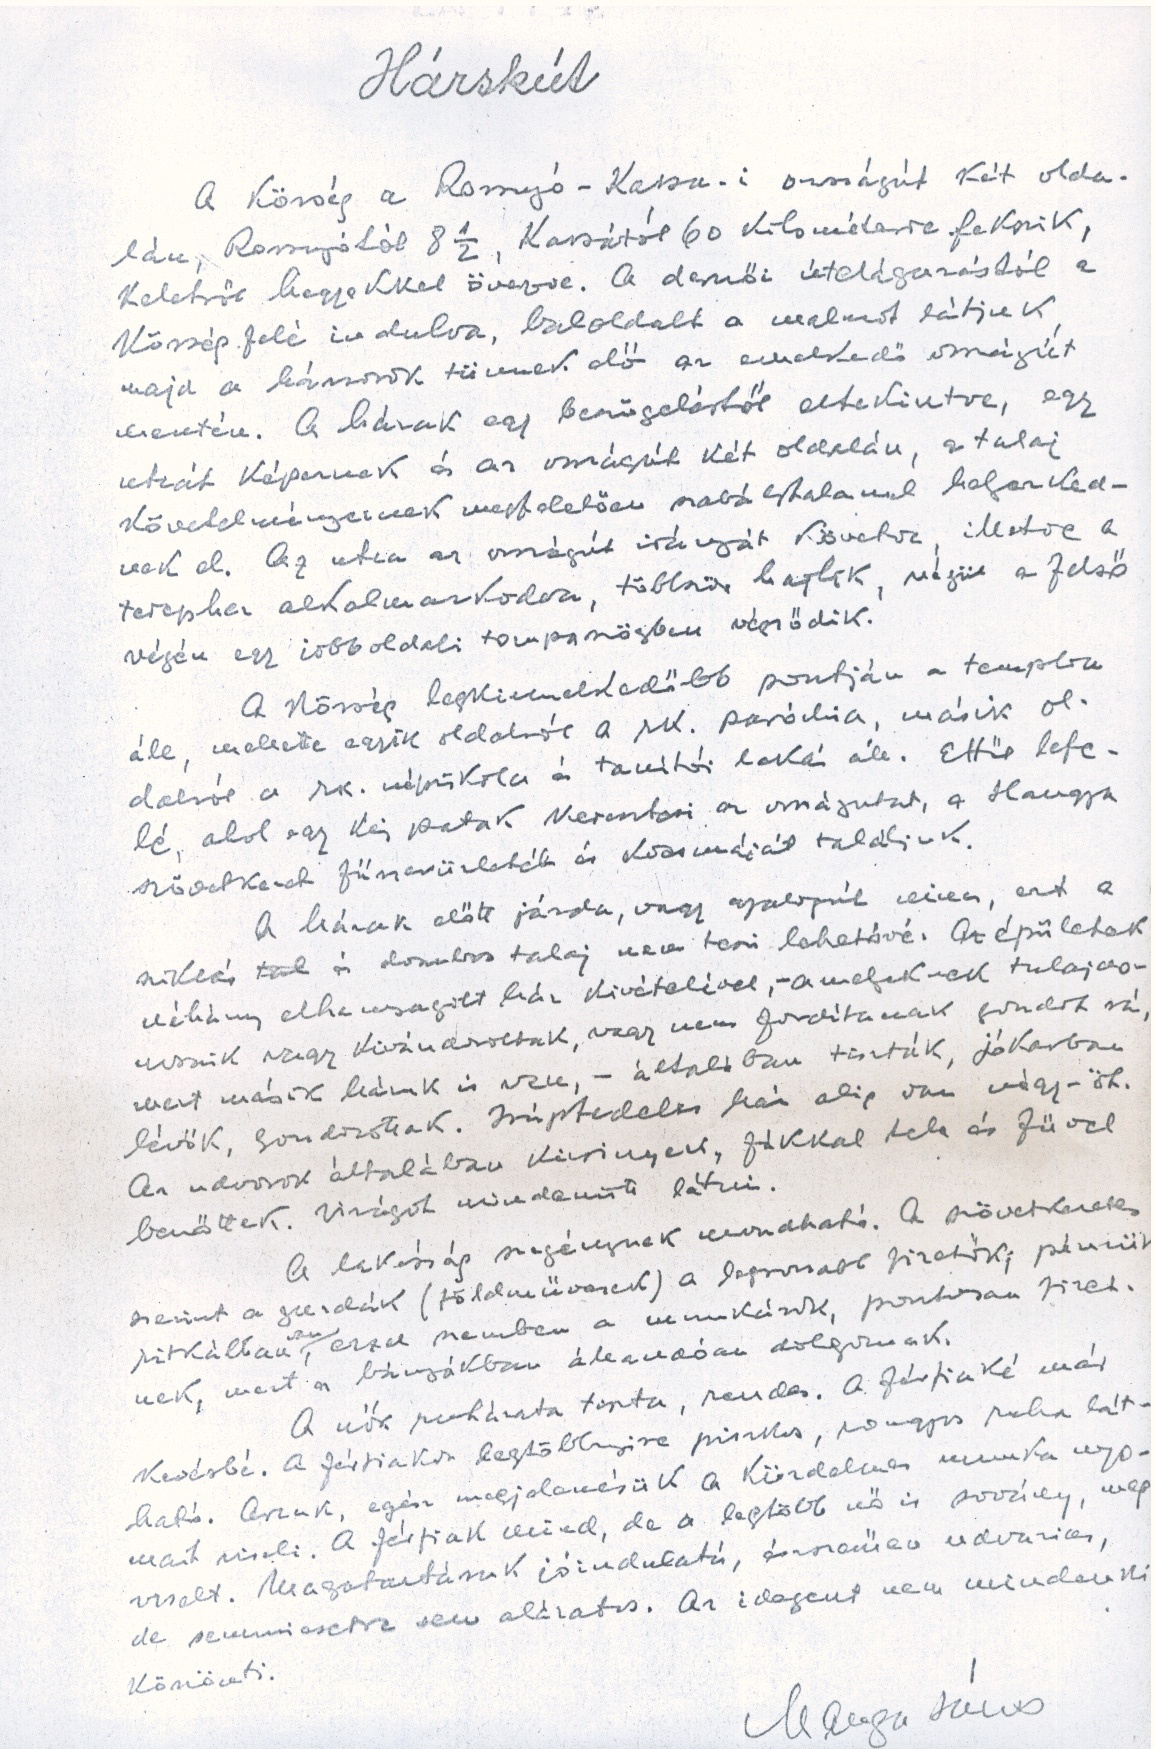 Dernôi Munkaközösség. Adatok Hárskút monográfiájához 1940 (Gömöri Múzeum, Putnok CC BY-NC-SA)